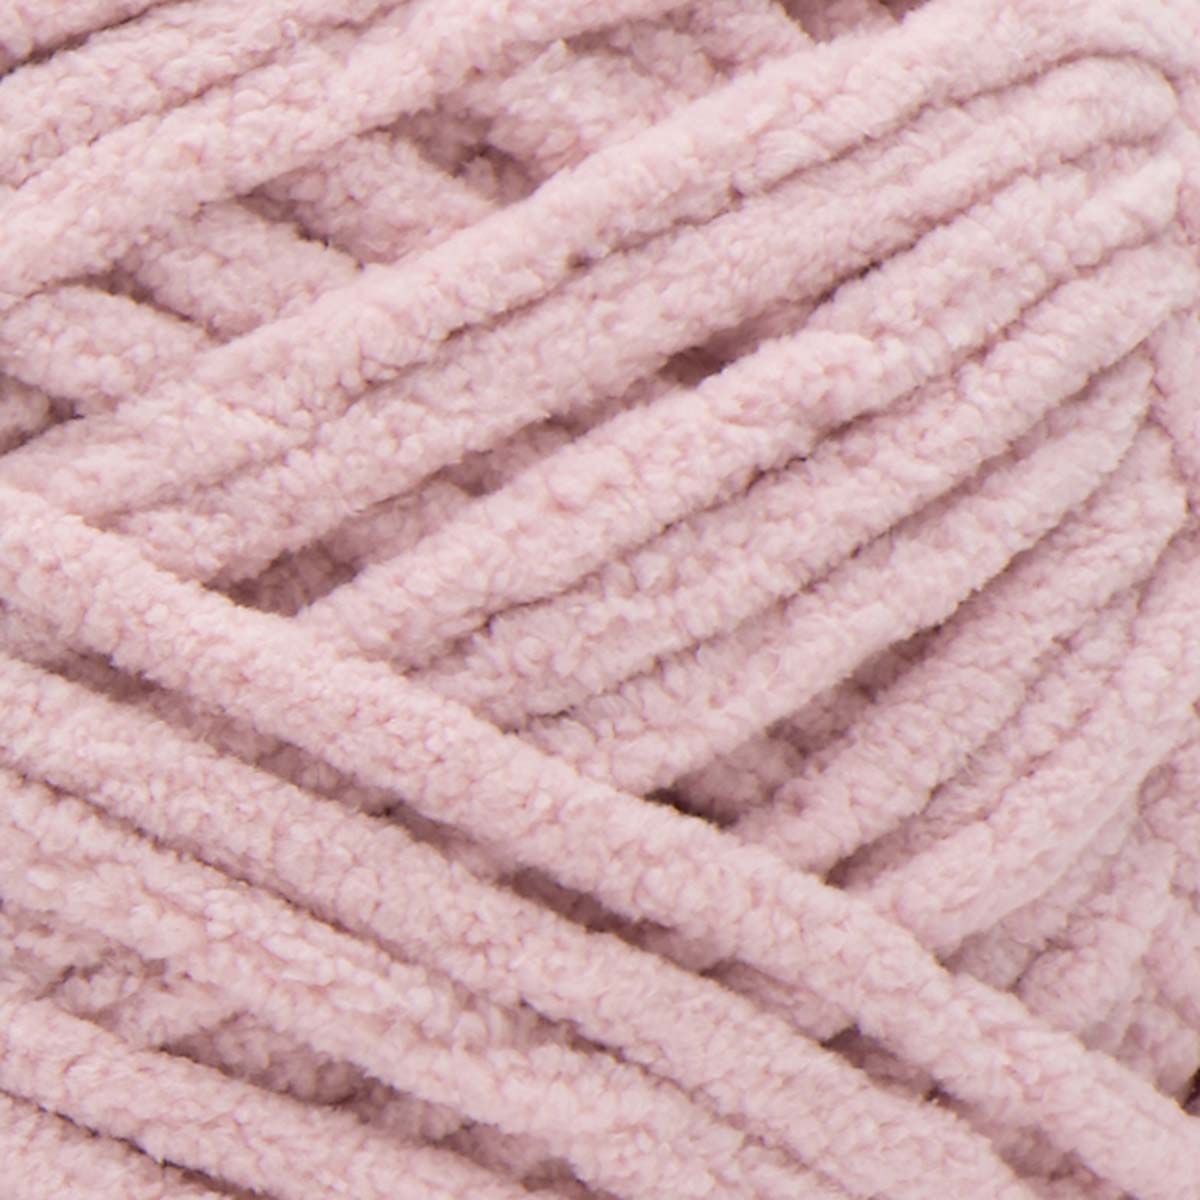 Bernat® Blanket™ #6 Super Bulky Polyester Yarn, Plum Fields 10.5oz